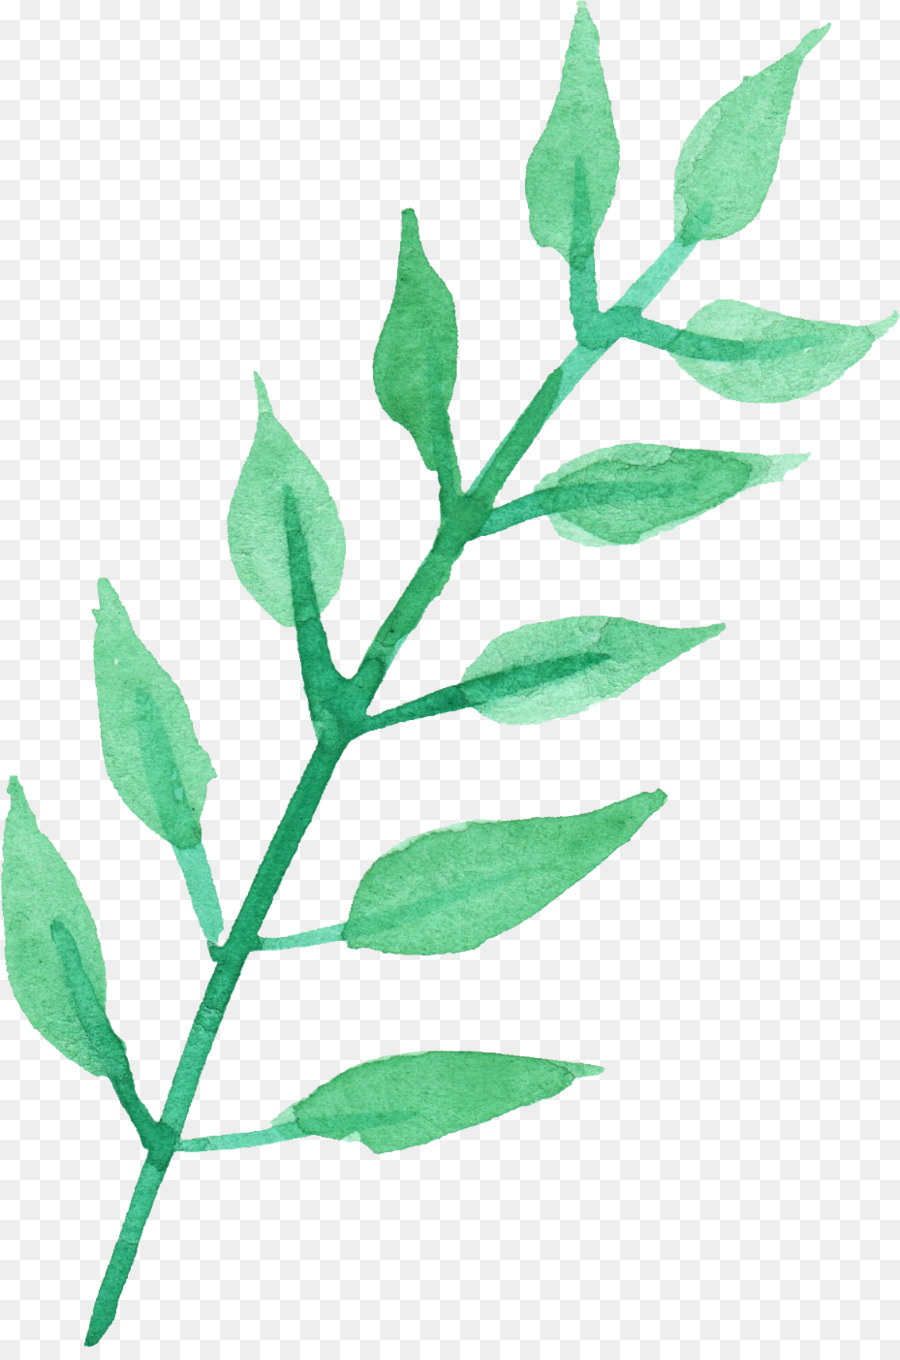 Transparent Watercolor Leaf Plant stem Twig Watercolor painting - watercolour png download - 929*1390 - Free Transparent Transparent Watercolor png Download.